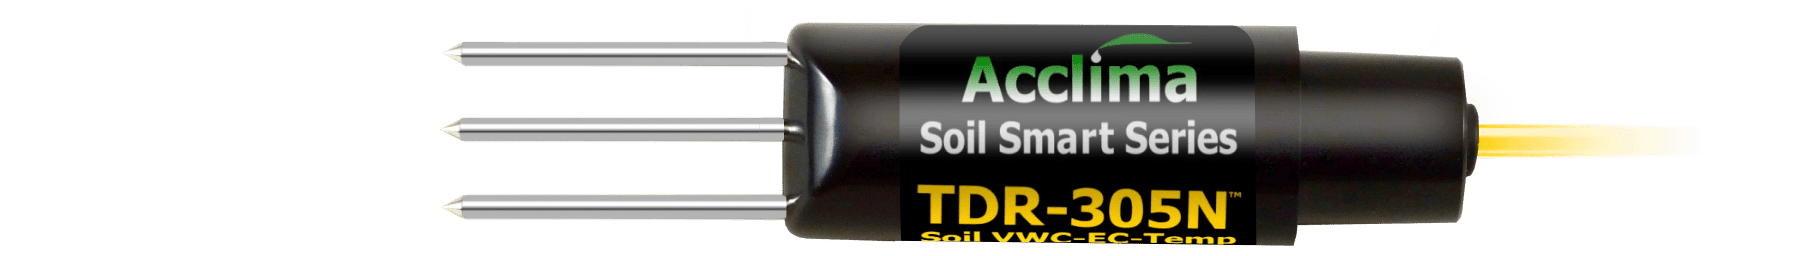 TDR-305N Soil Moisture Sensor Water Content